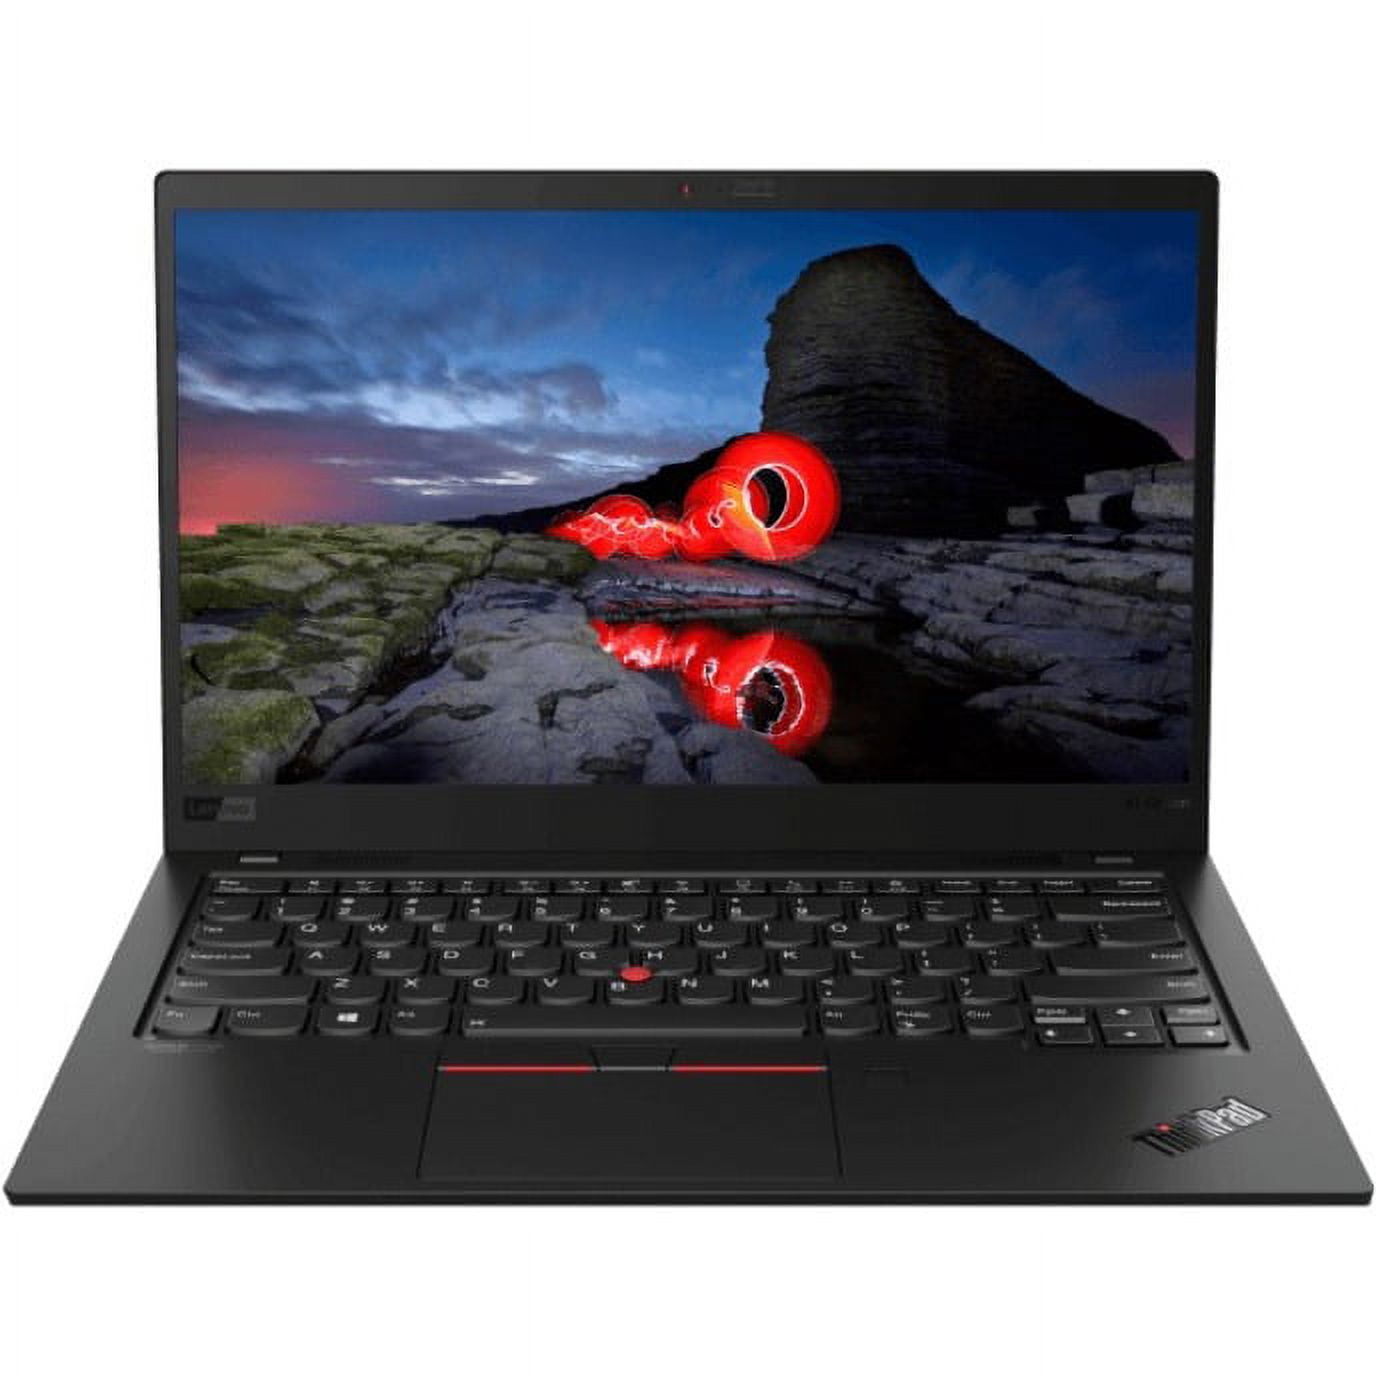 Lenovo ThinkPad X1 Carbon 14 FHD Ultrabook Laptop